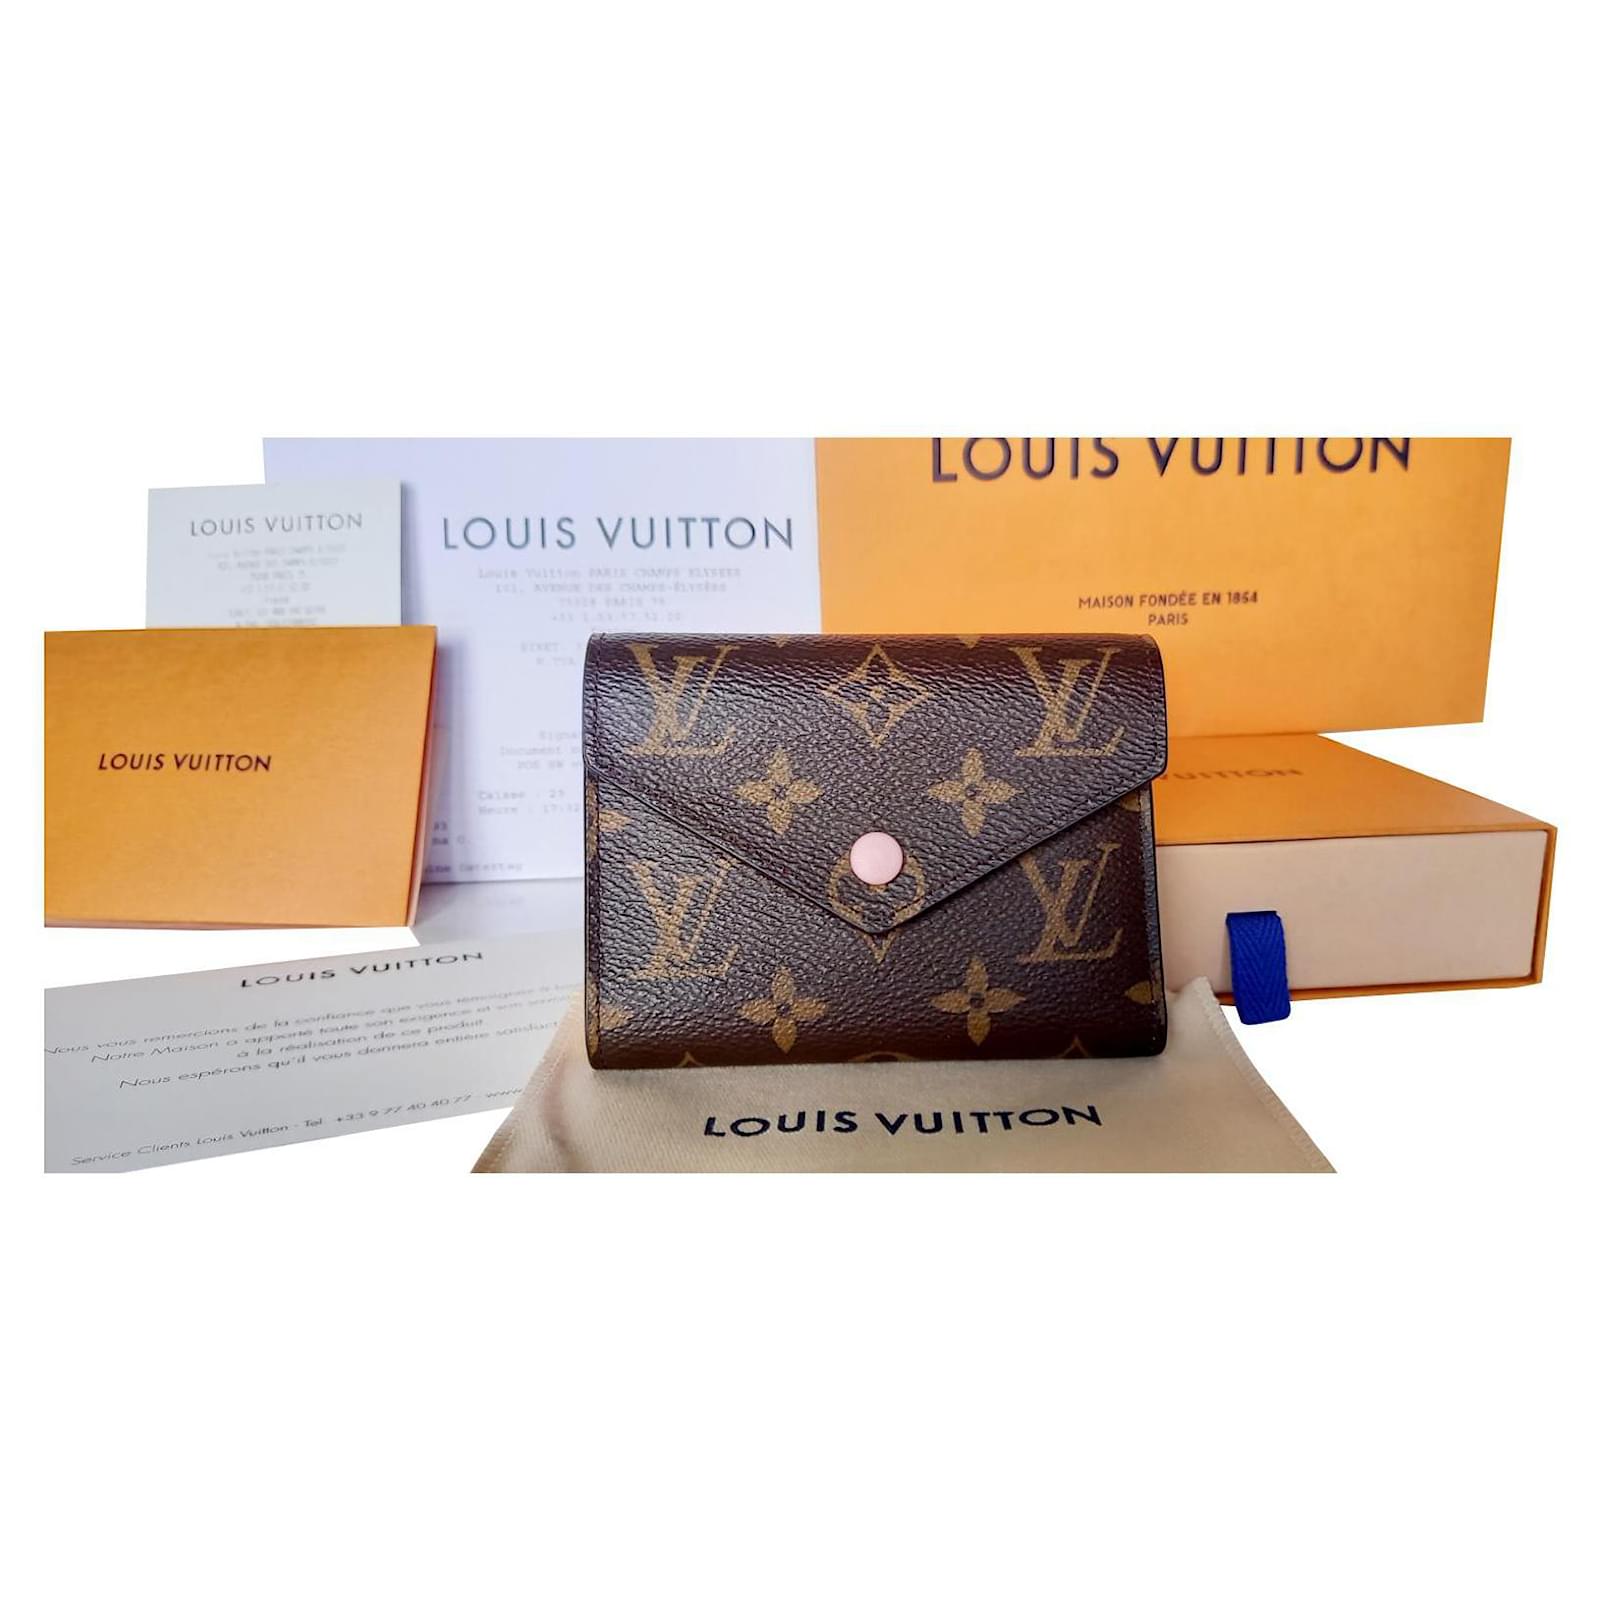 Louis Vuitton portofeuilles Victorine inicial impresa M Cartera